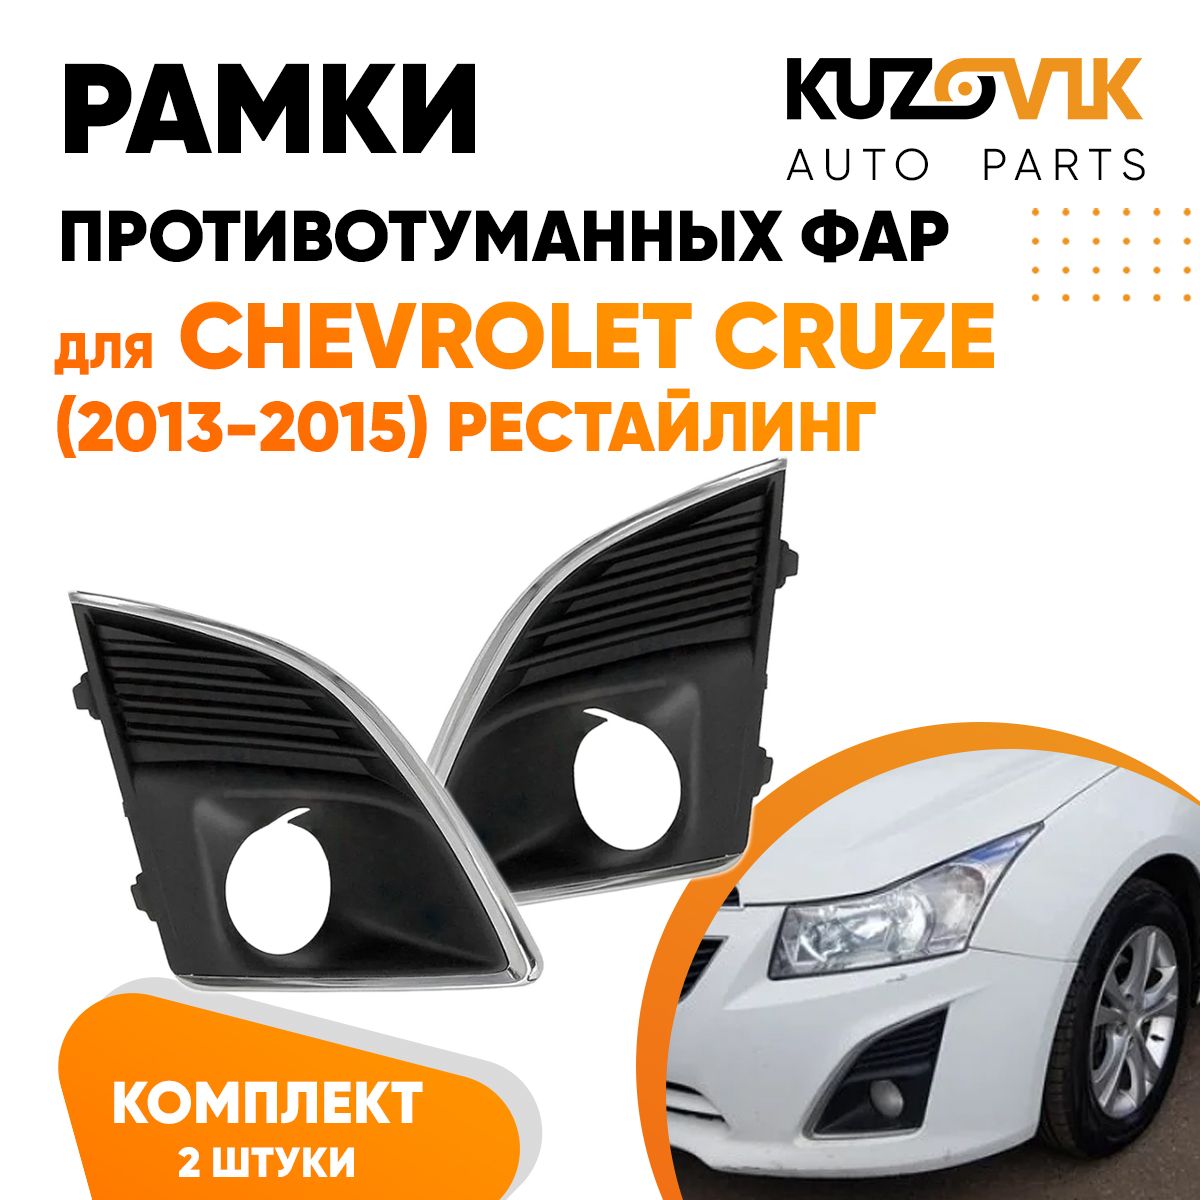 Рамки птф KUZOVIK Шевроле Круз (2013-2015) рестайлинг (2 шт) комплект KZVK3200019704